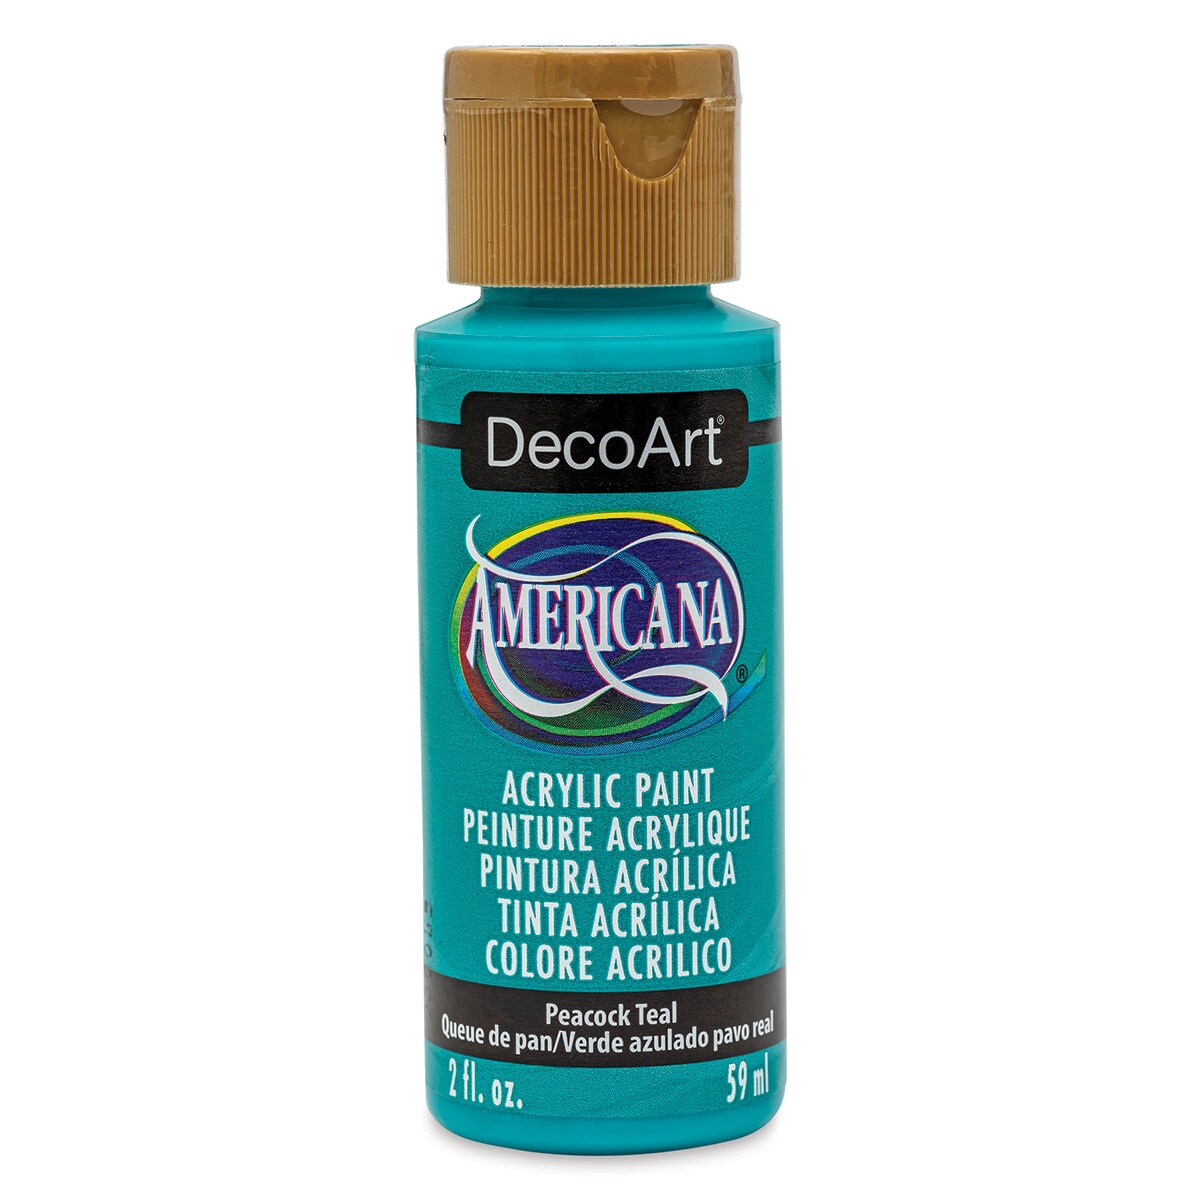 DecoArt Americana Acrylic Paint - Peacock Teal, 2 oz